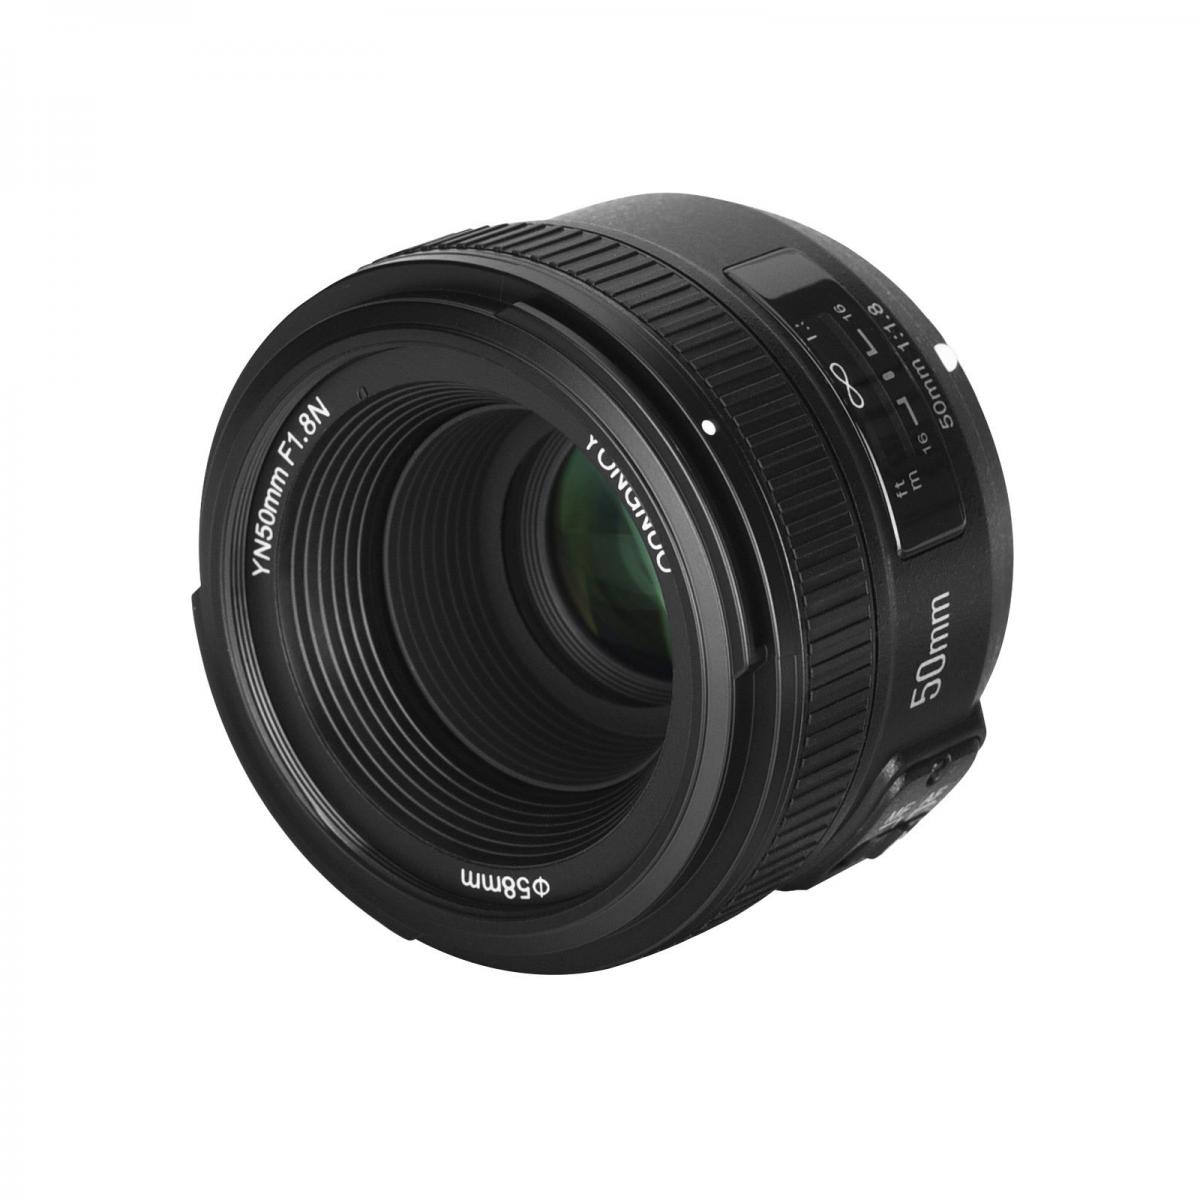 Yongnuo YN 50 mm f/1.8N 標準固定焦点レンズオートフォーカス ニコン F マウントデジタル一眼レフカメラ用